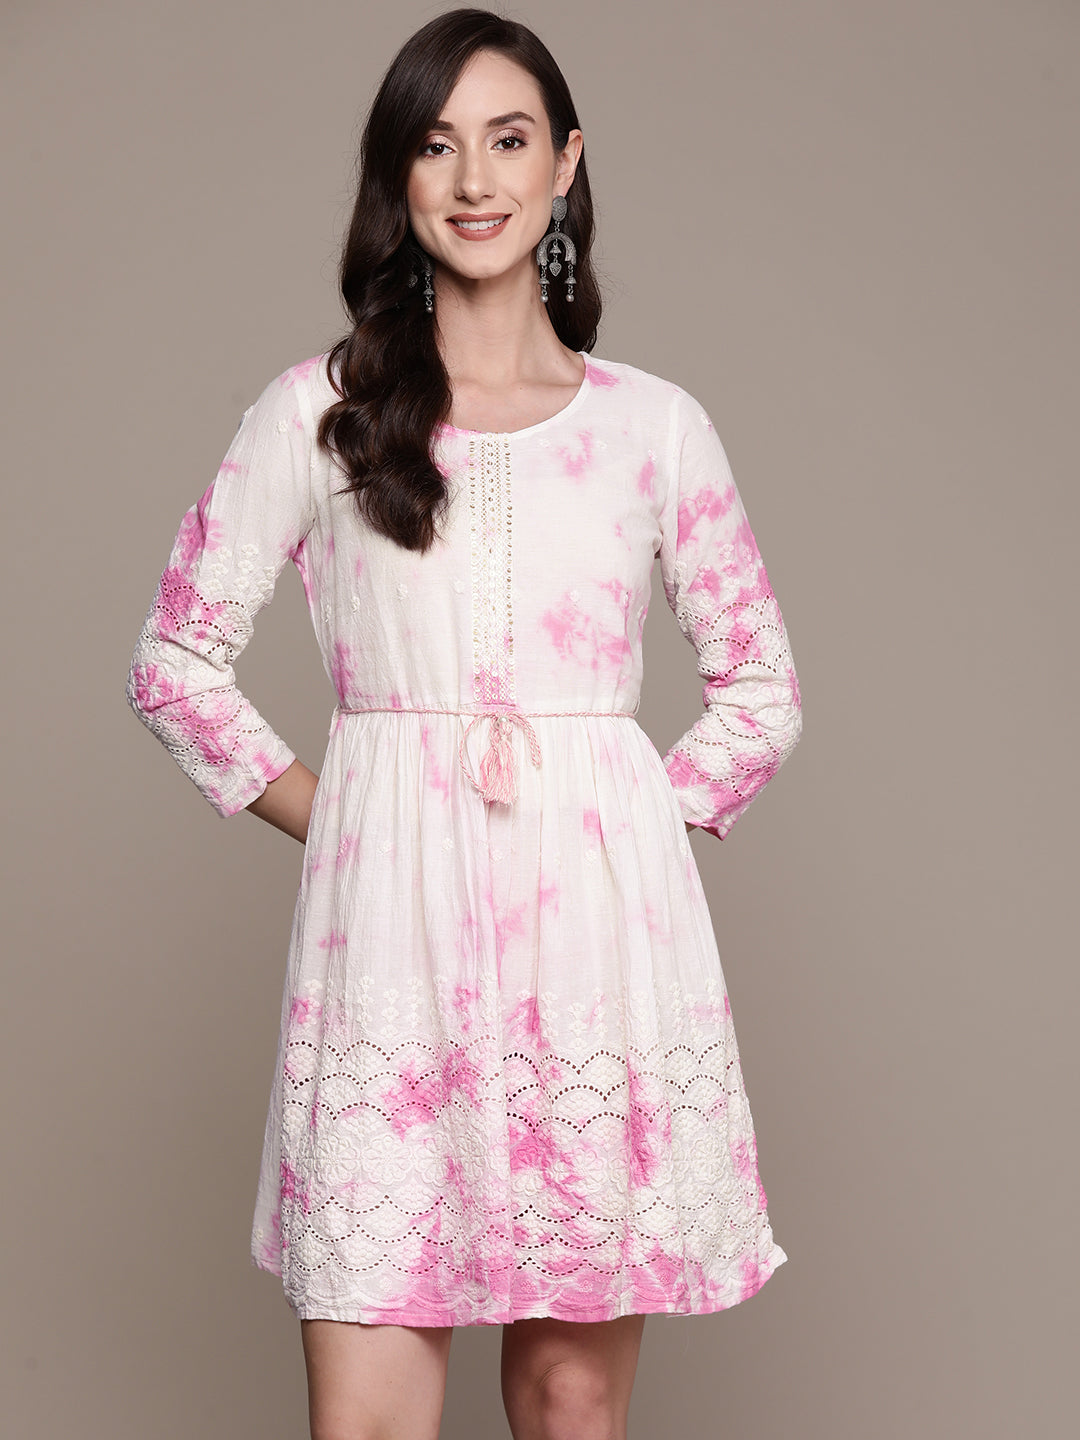 Ishin Women's Pink Schiffli Embroidered A-Line Dress